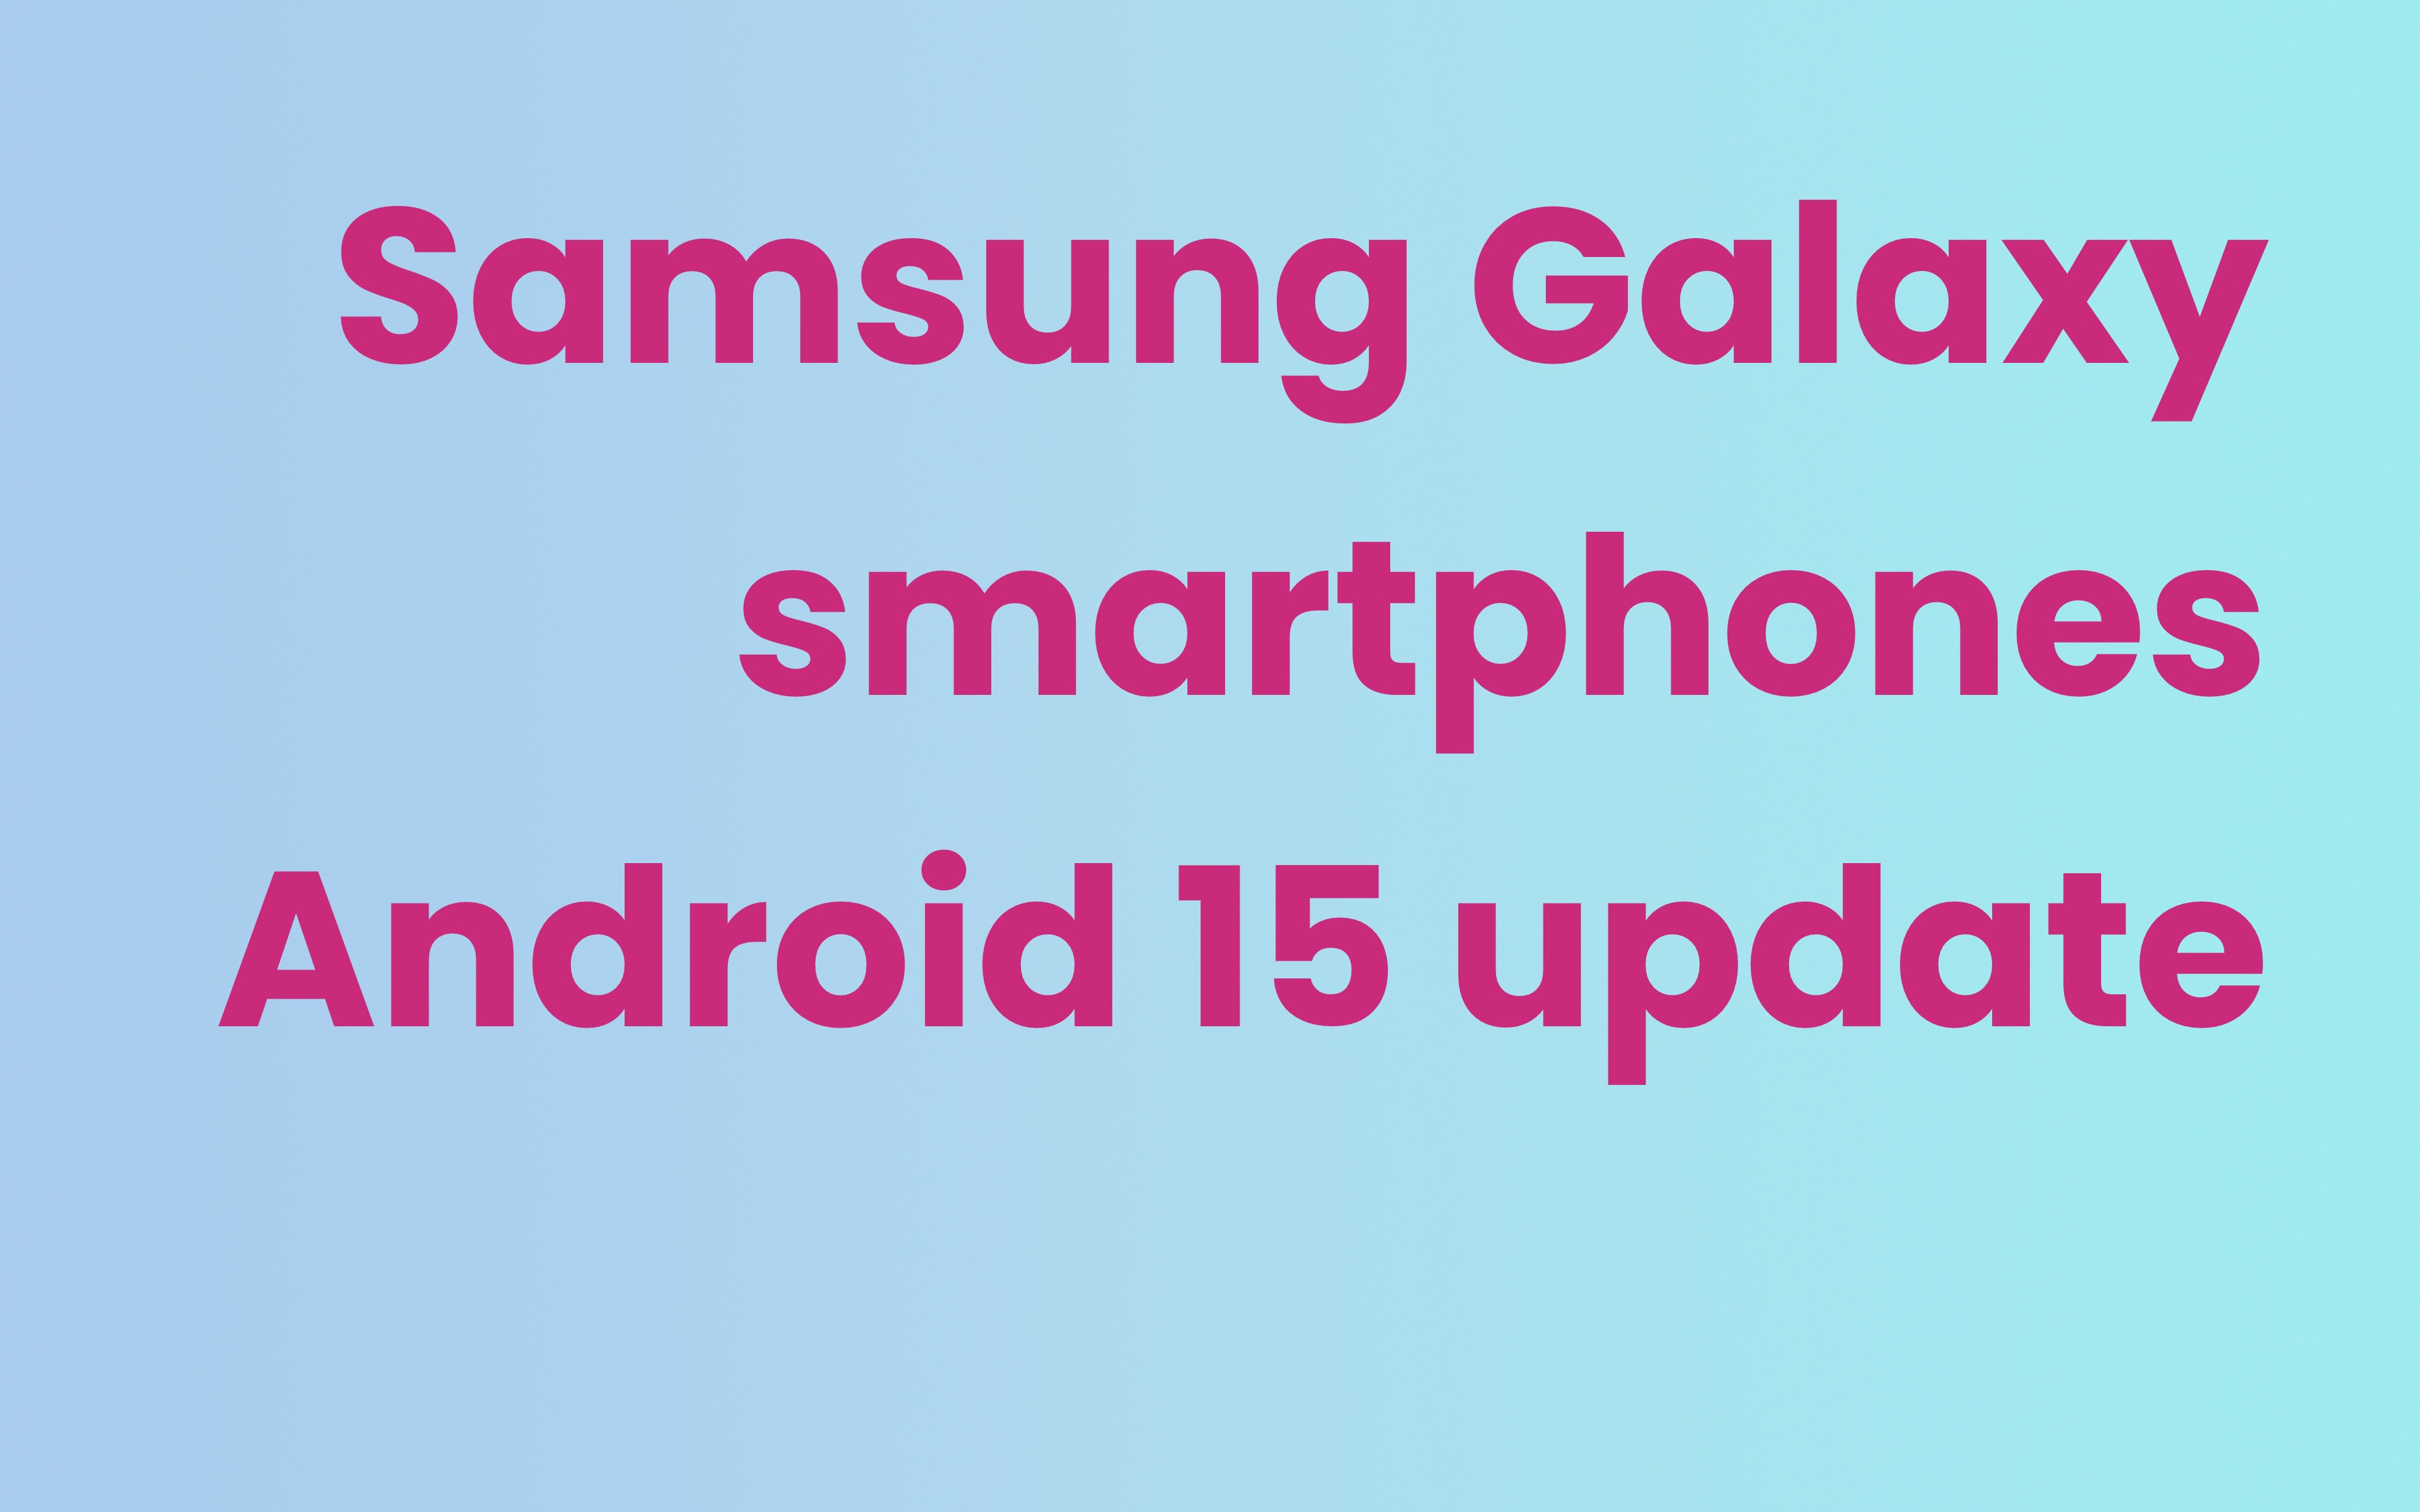 Samsung Galaxy smartphones Android 15 update